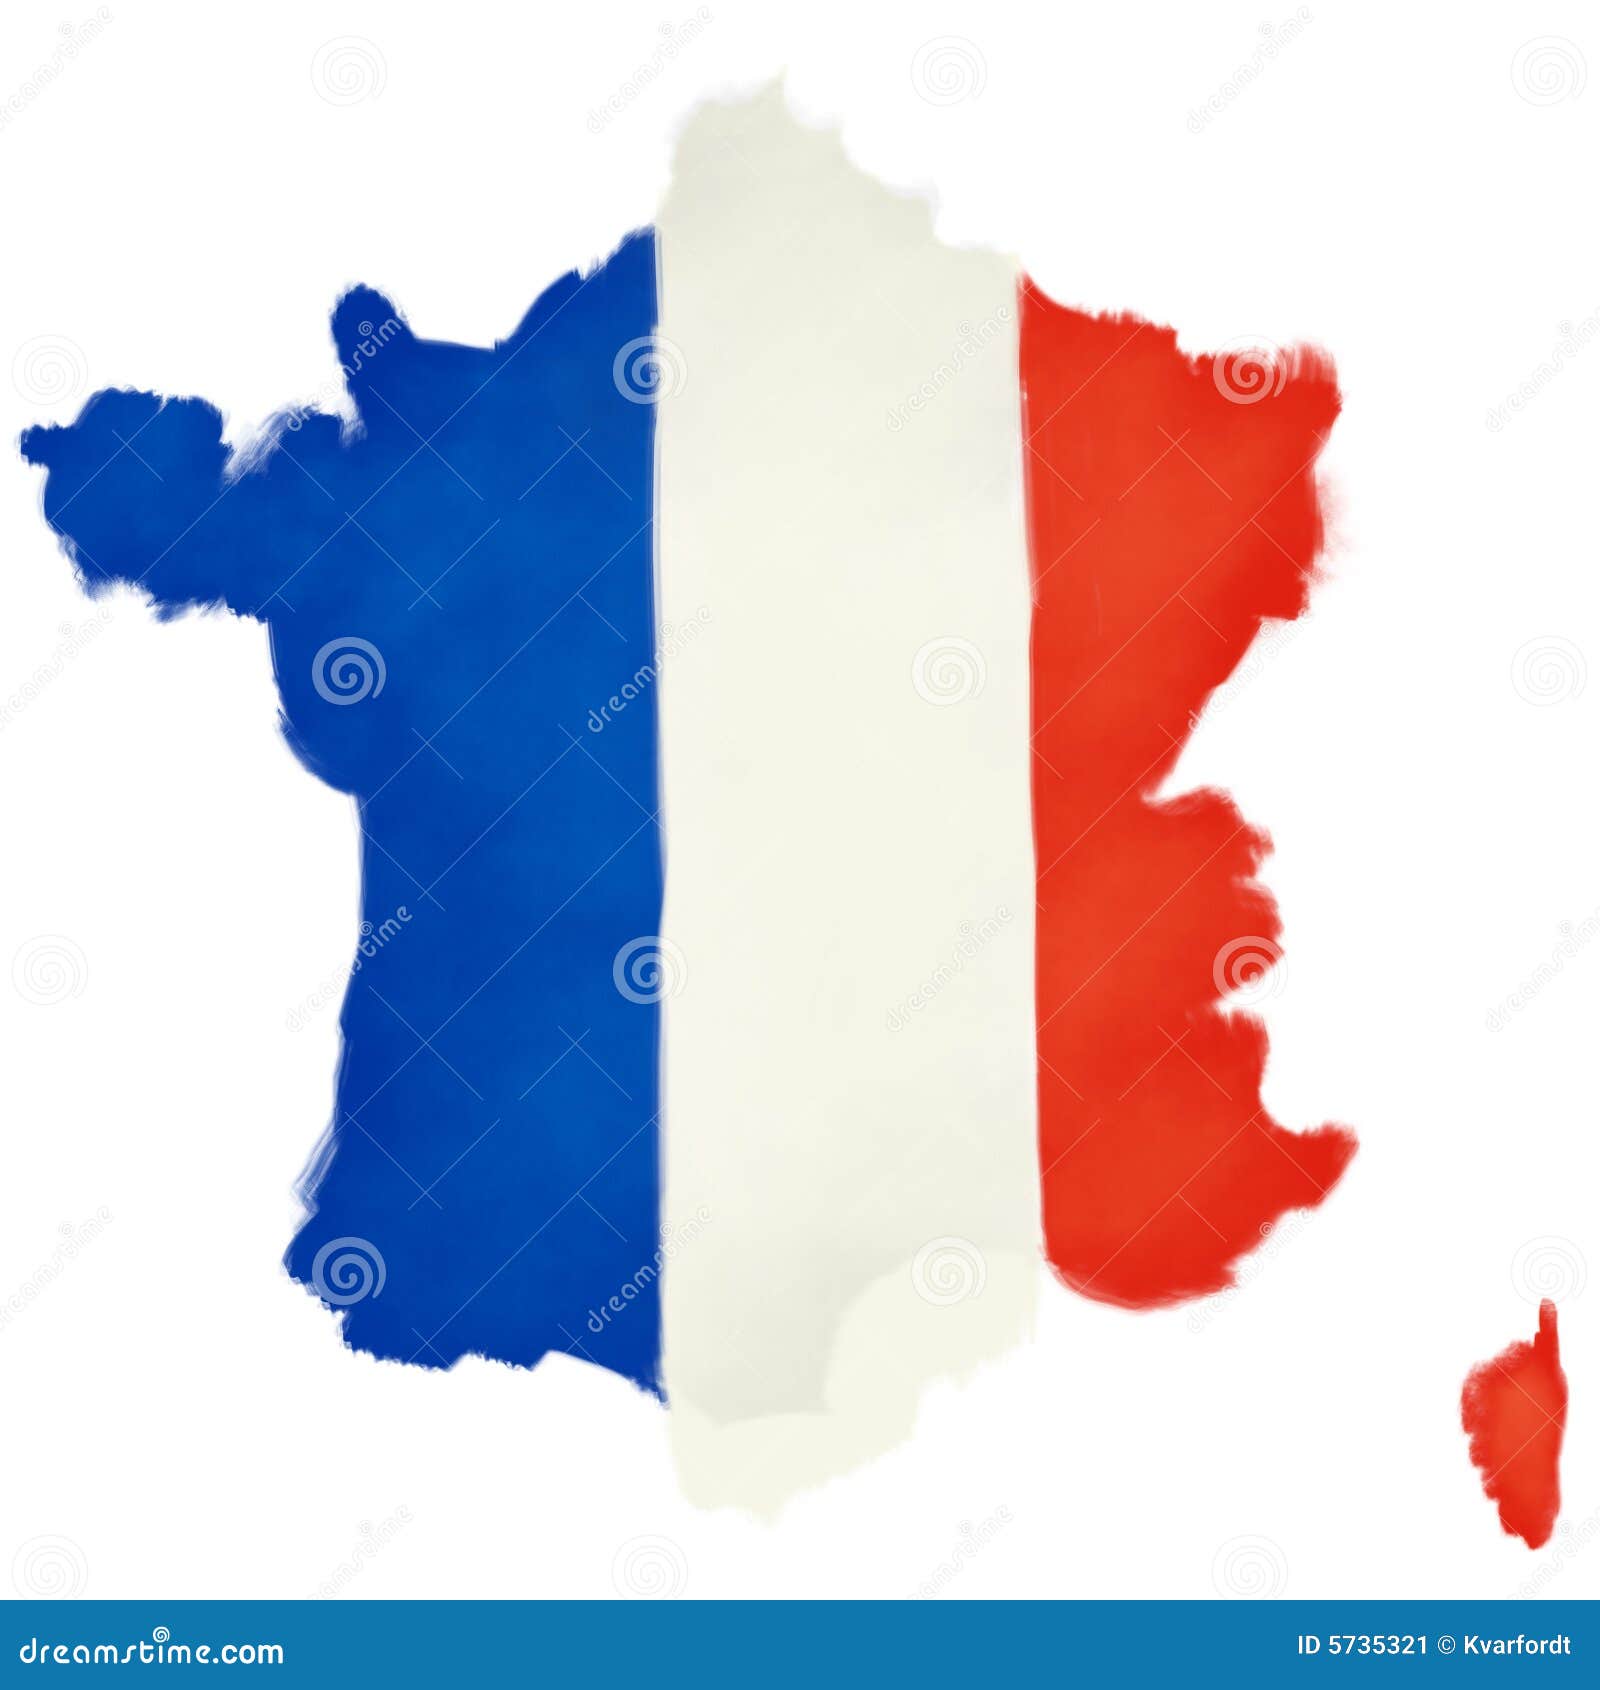 Французский фран. Флаг Франции 1789. Флаг оккупированной Франции 1941. Флаг Франции 1914. Французский флаг 1914.